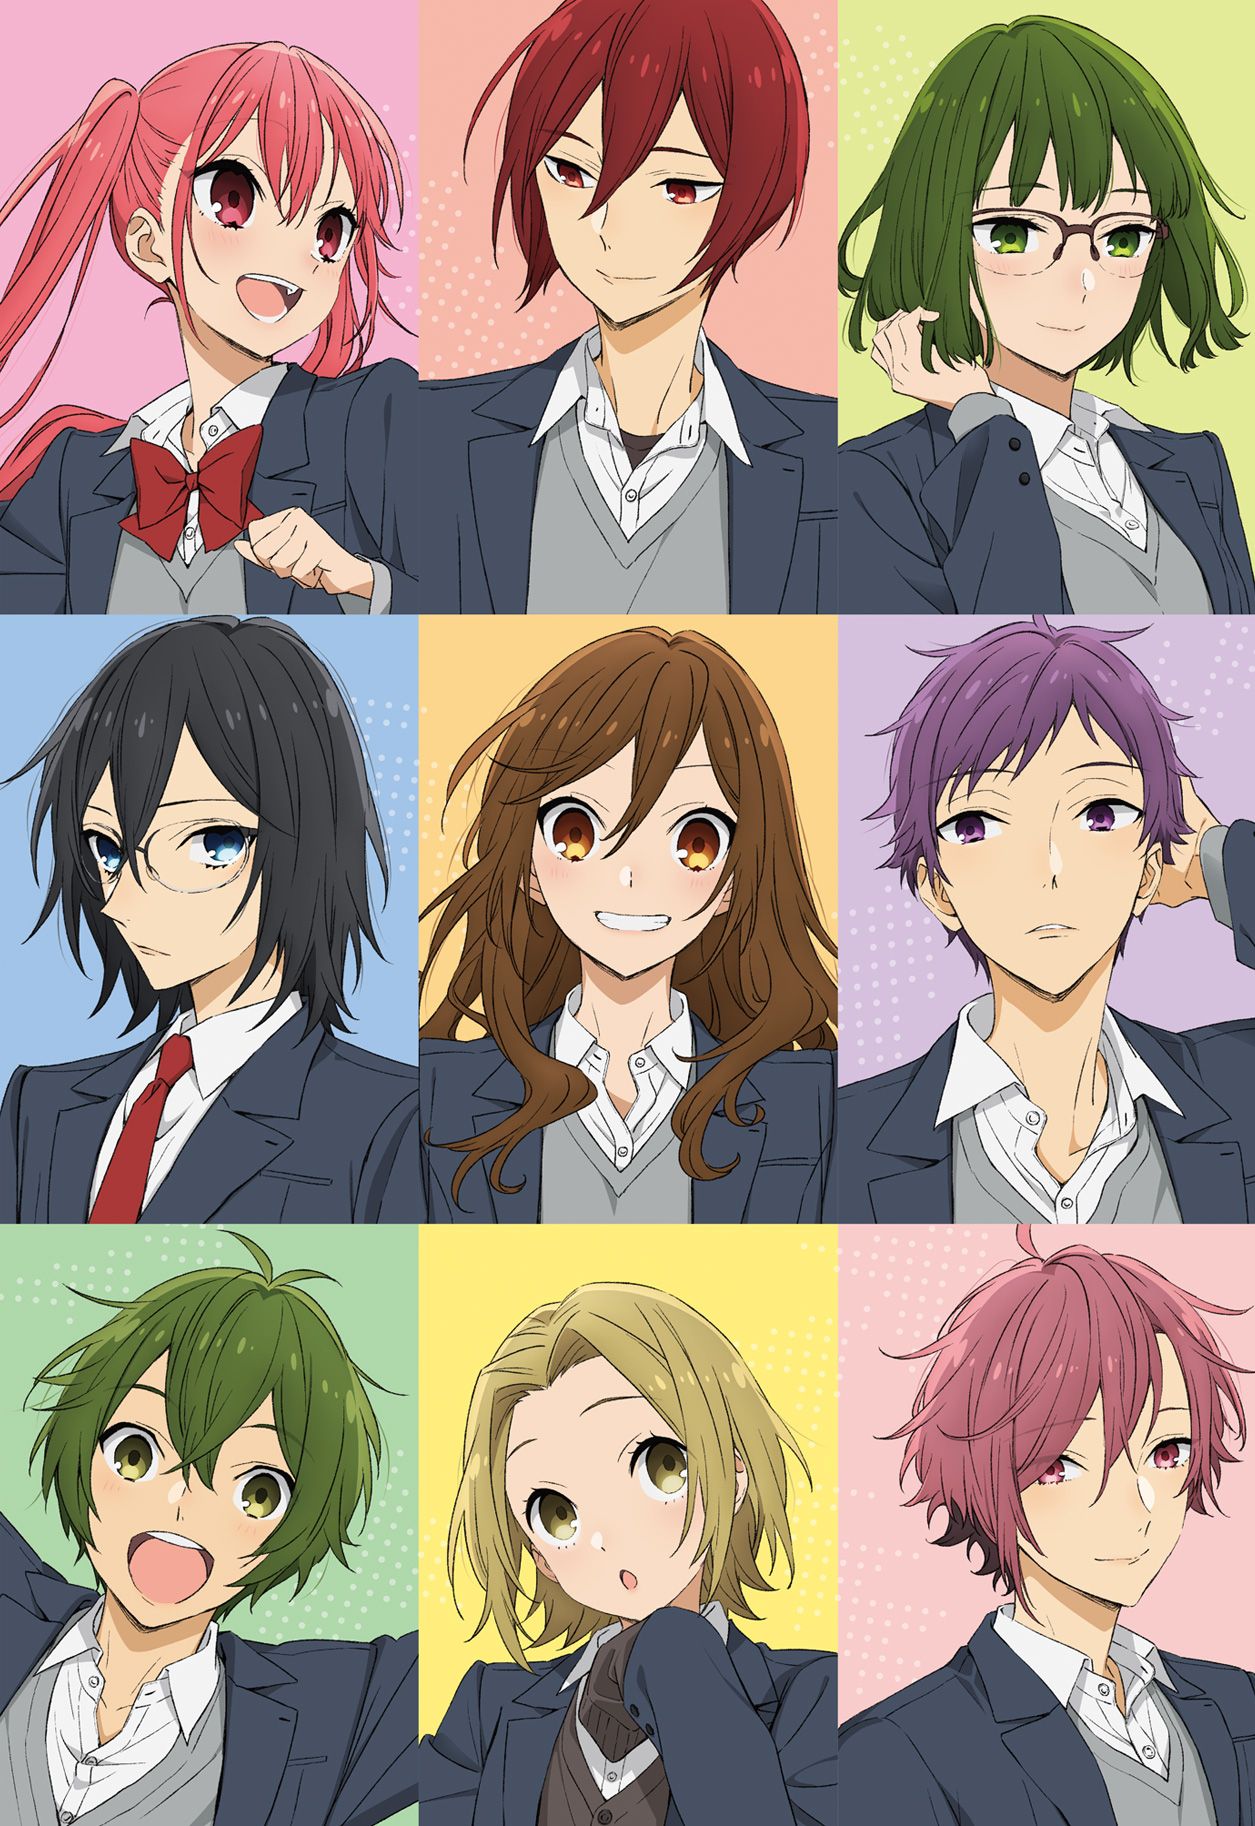 Kouno Sakura Anime Image Board